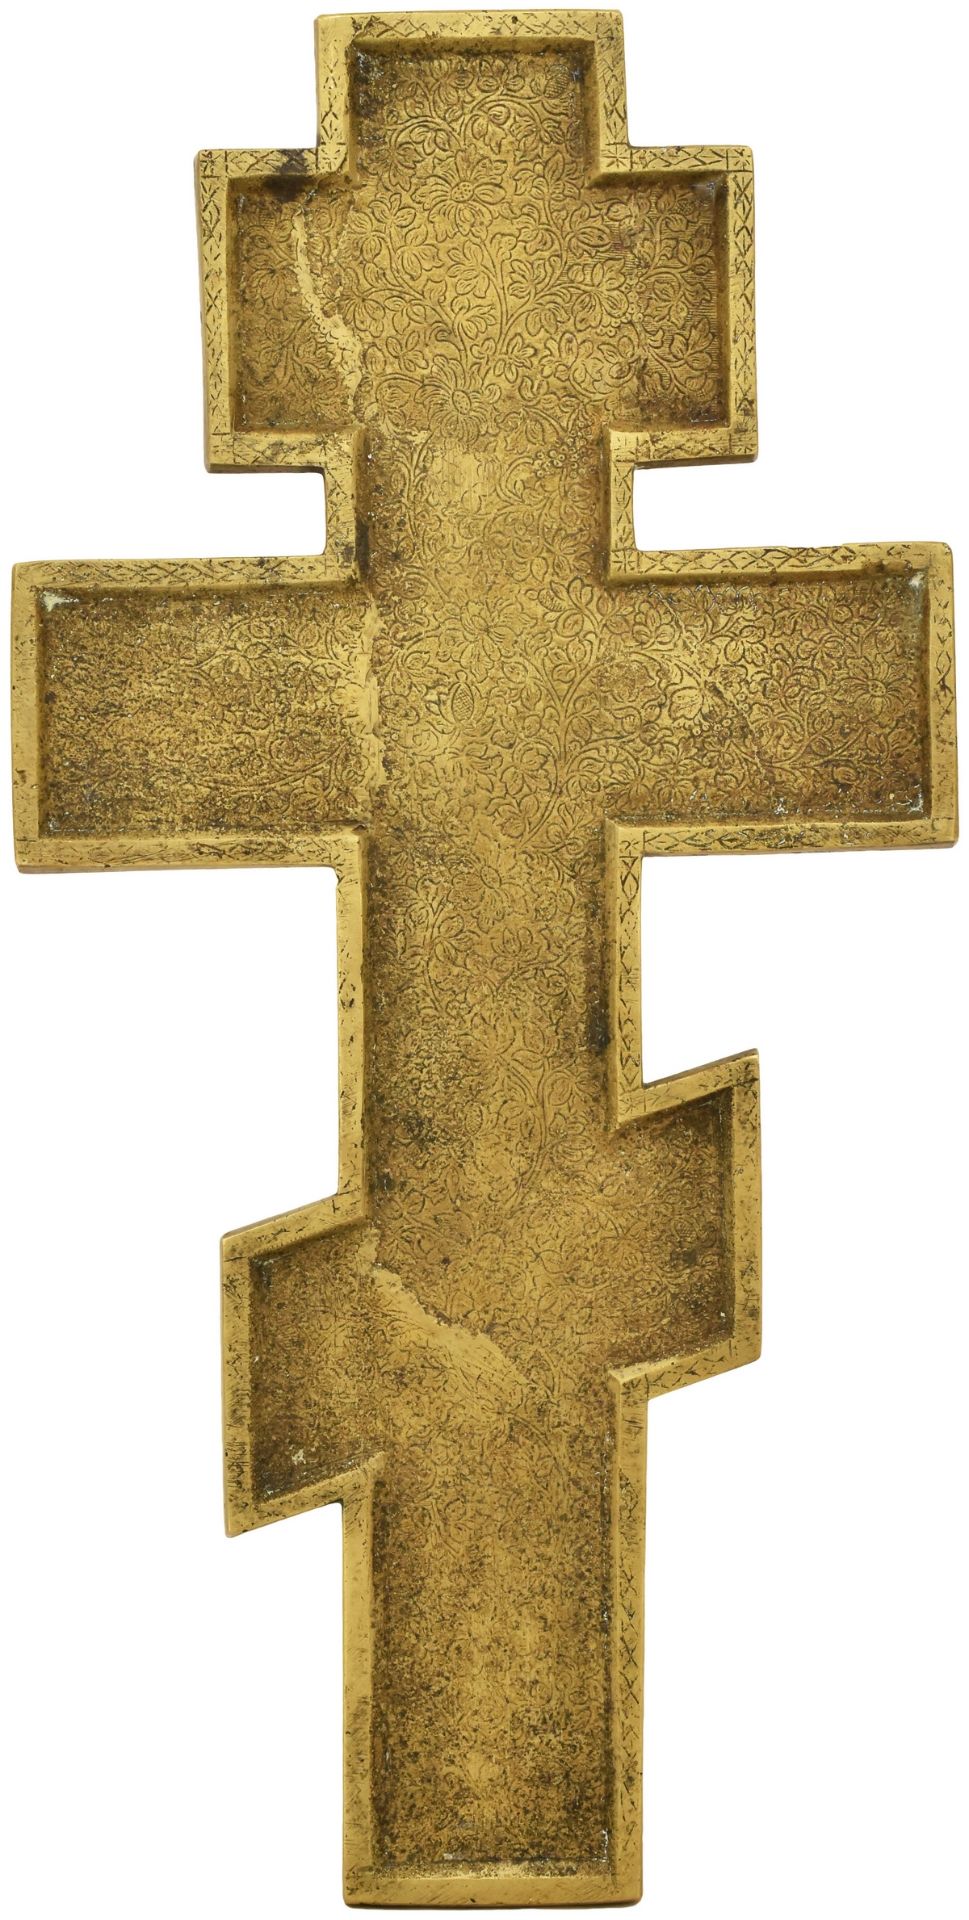 [Russia] A fine brass crucifix. - 19th century. - 40x20 cm. - Image 4 of 4